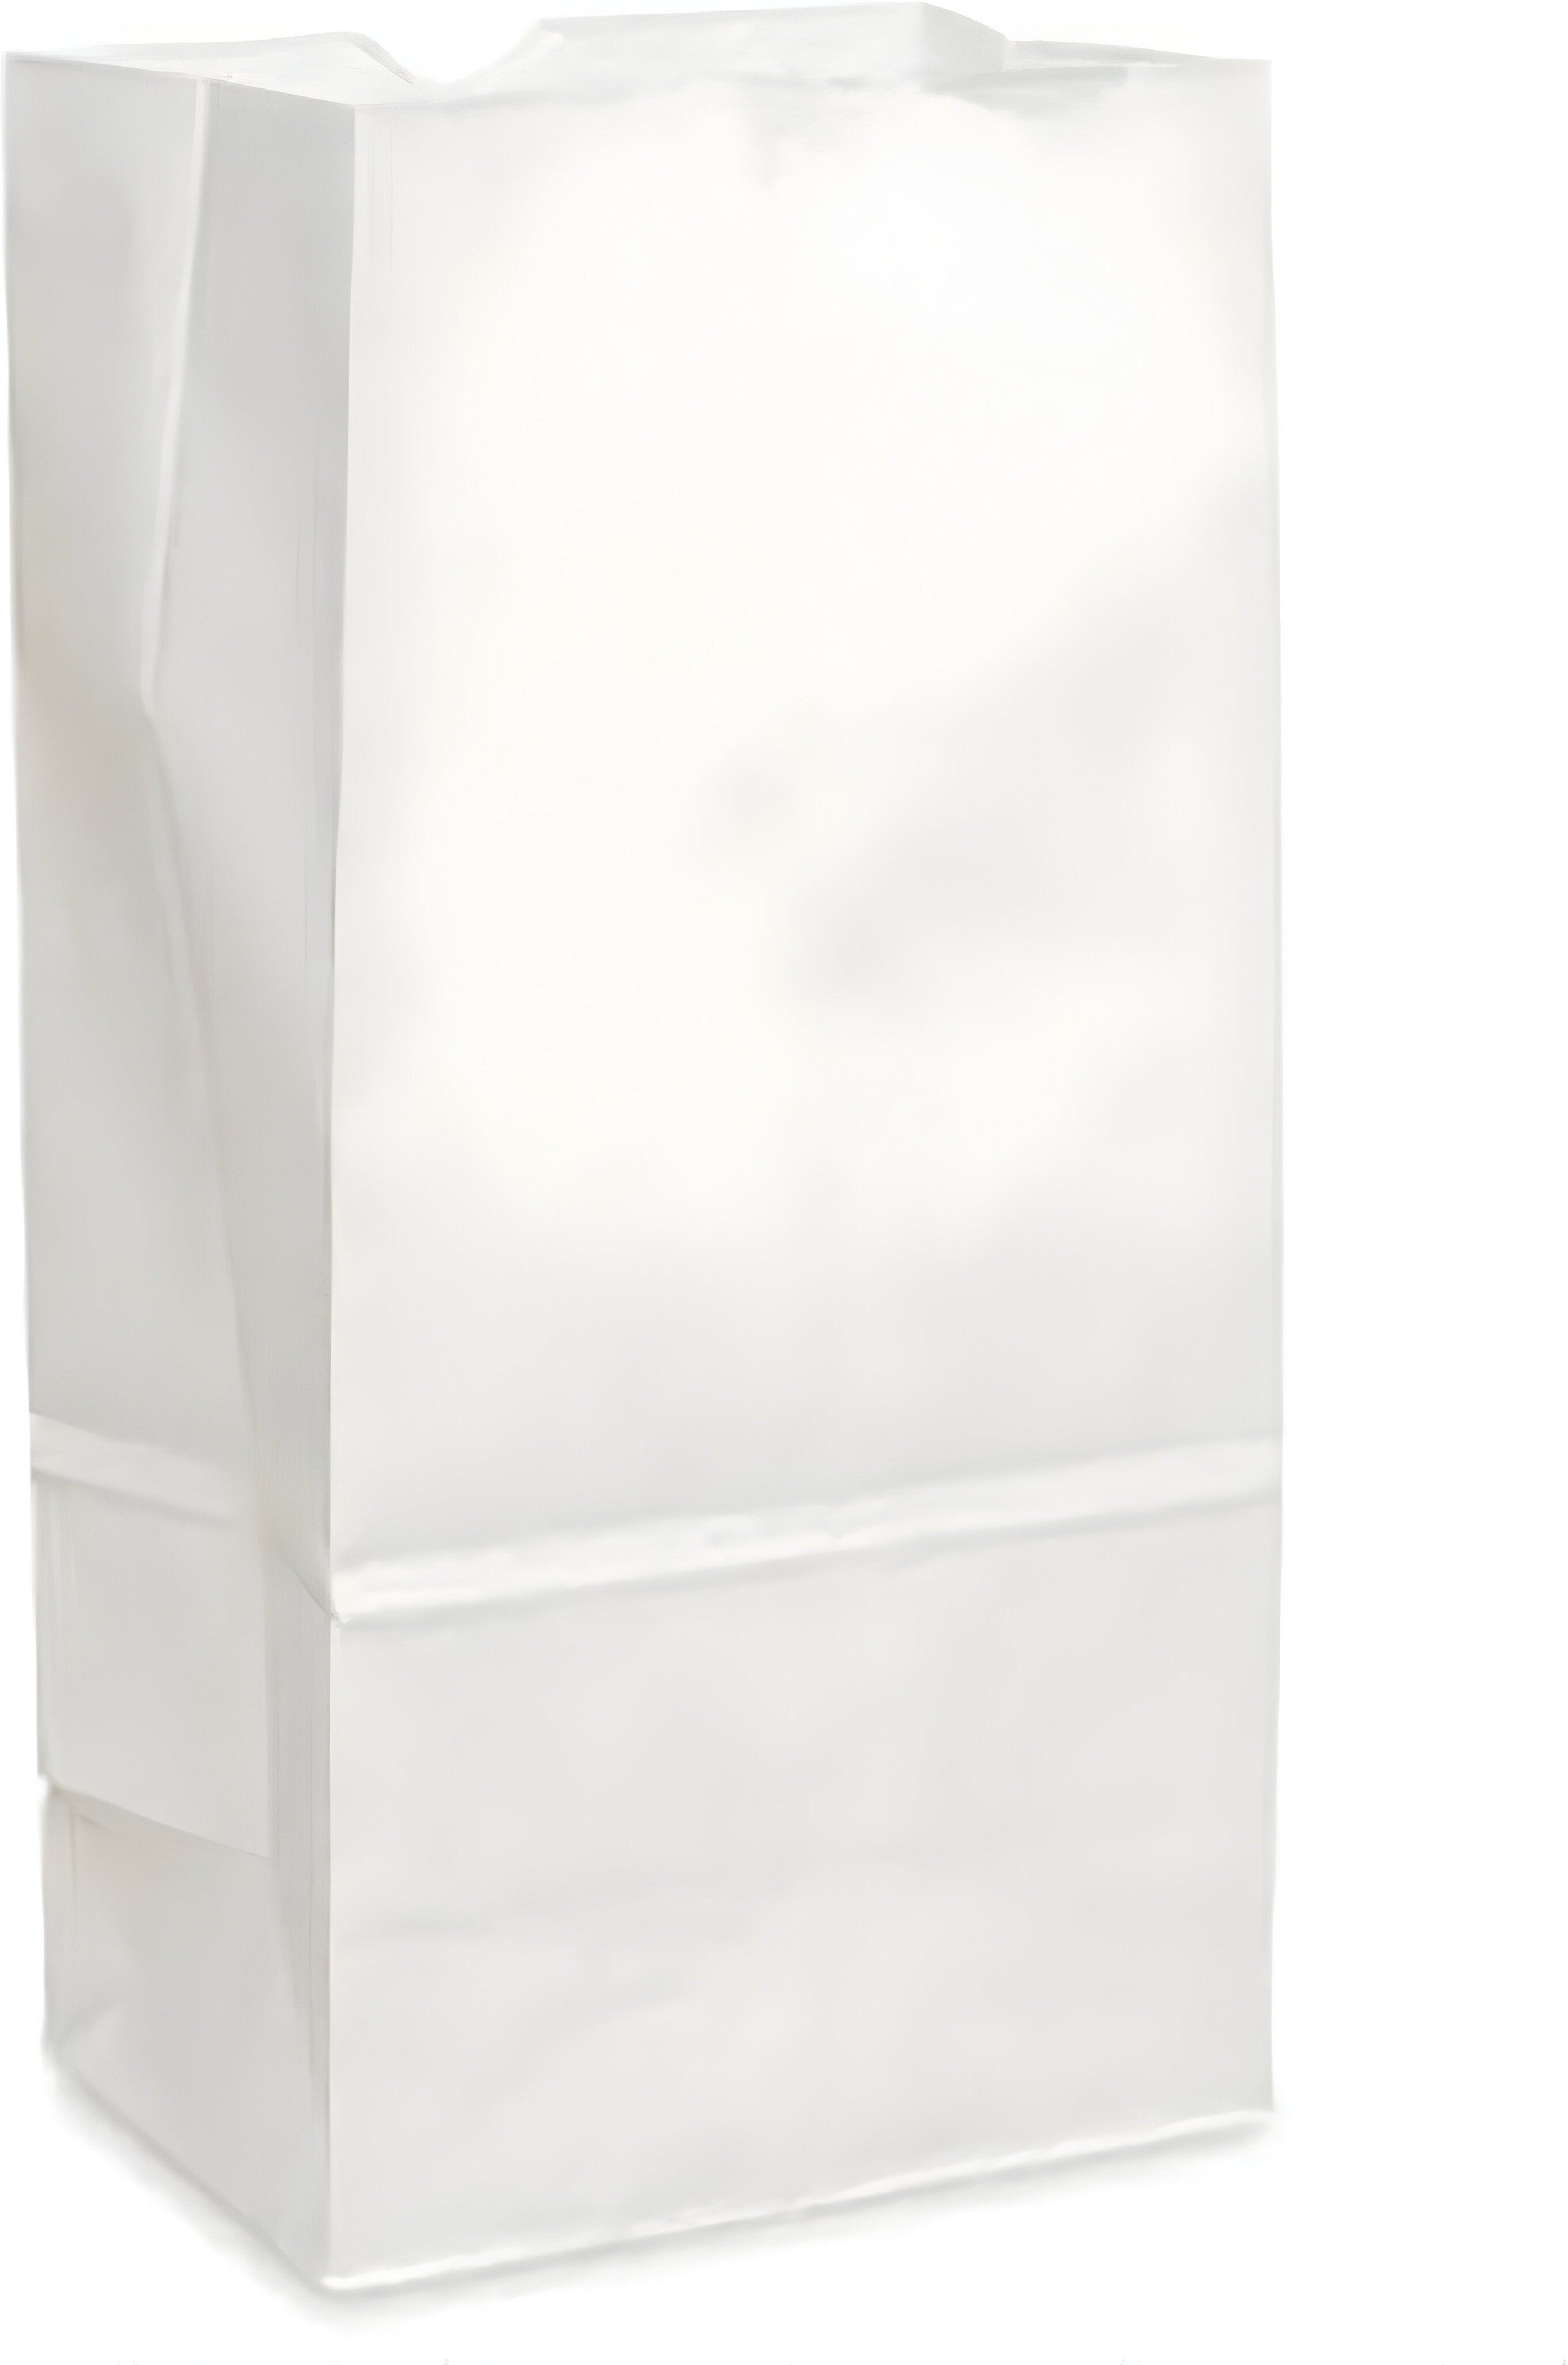 Atlas Paper Bag - 12 lb White Paper Bags, 500/Bn - 4120003